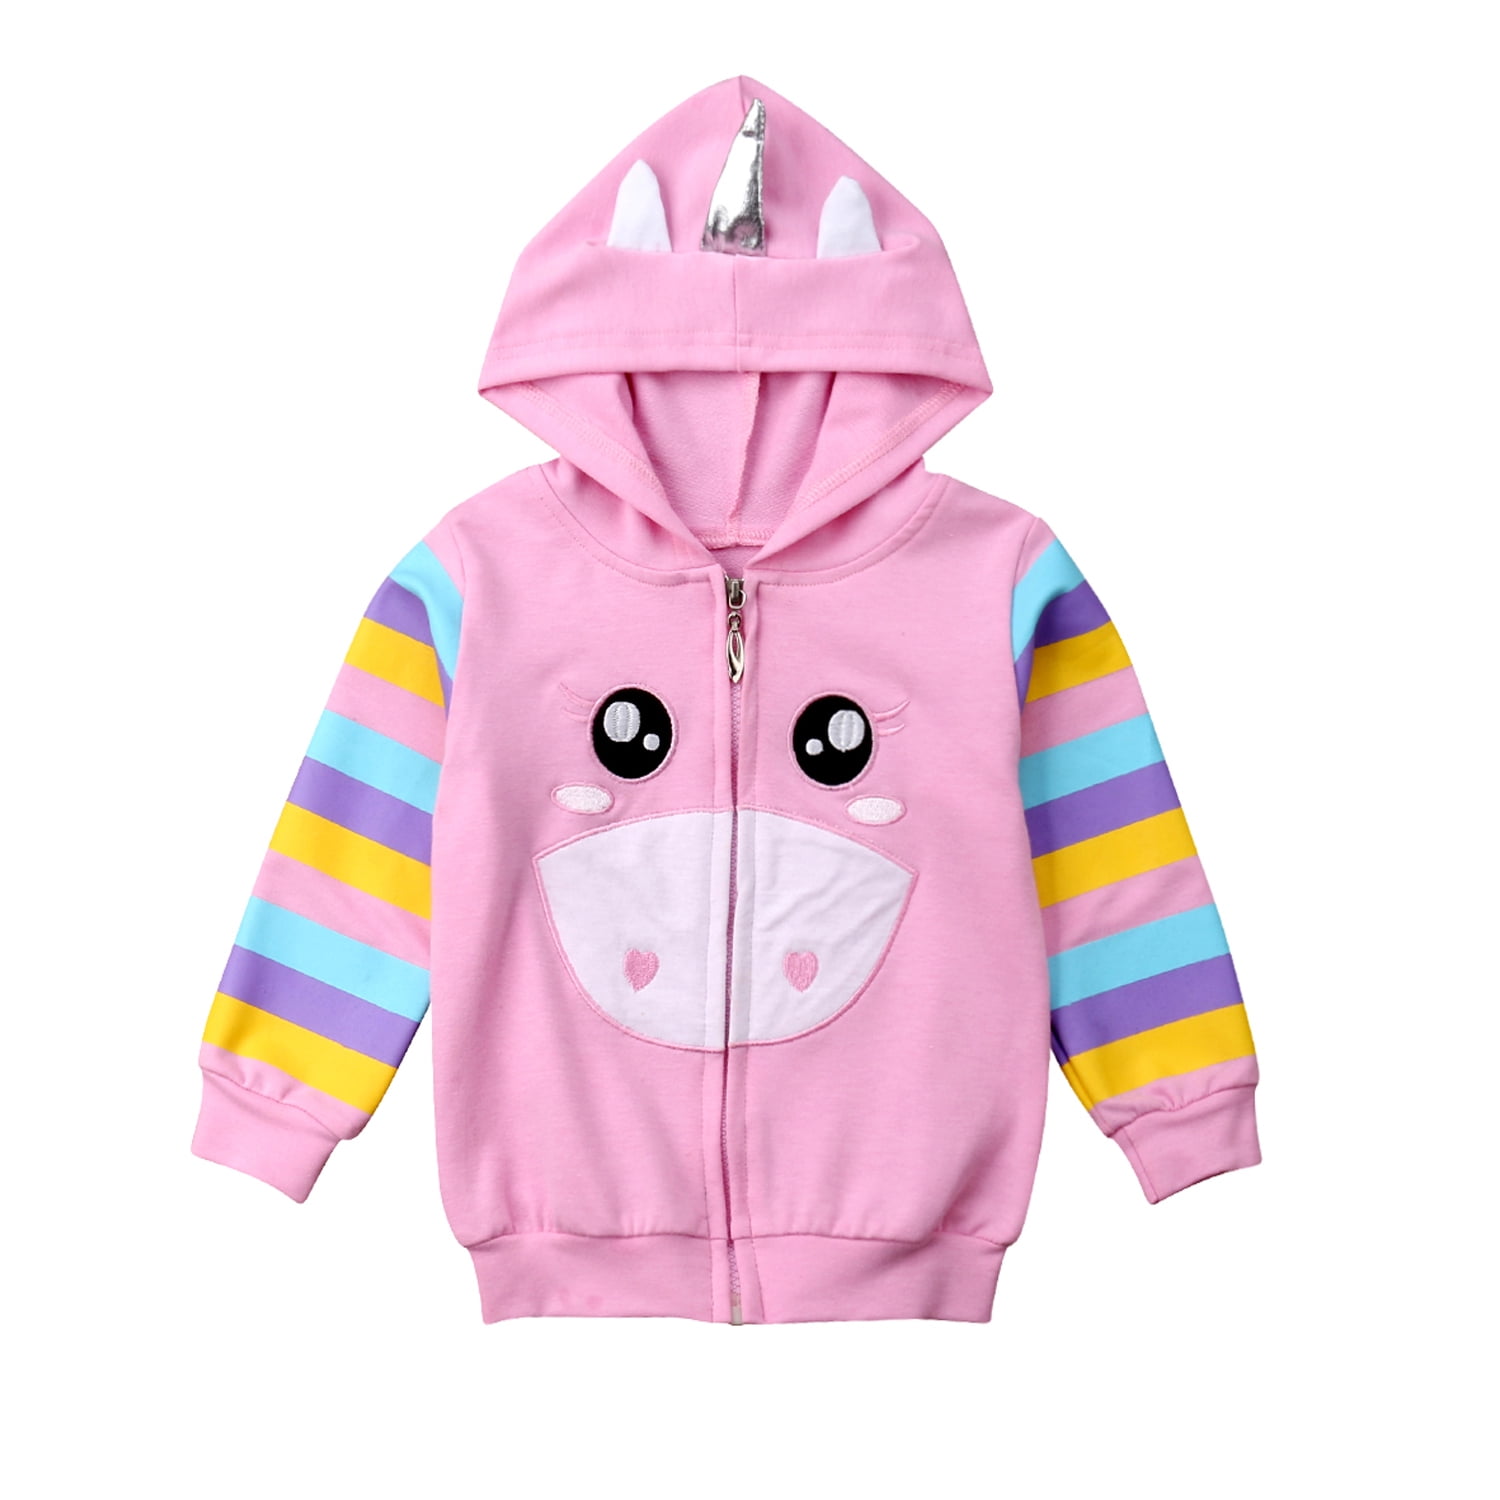 Toddler Baby Girls Unicorn Hoodies Cartoon Sweater Outwear Sweatshirt Jacket for Baby Infant Kids 0-4Y